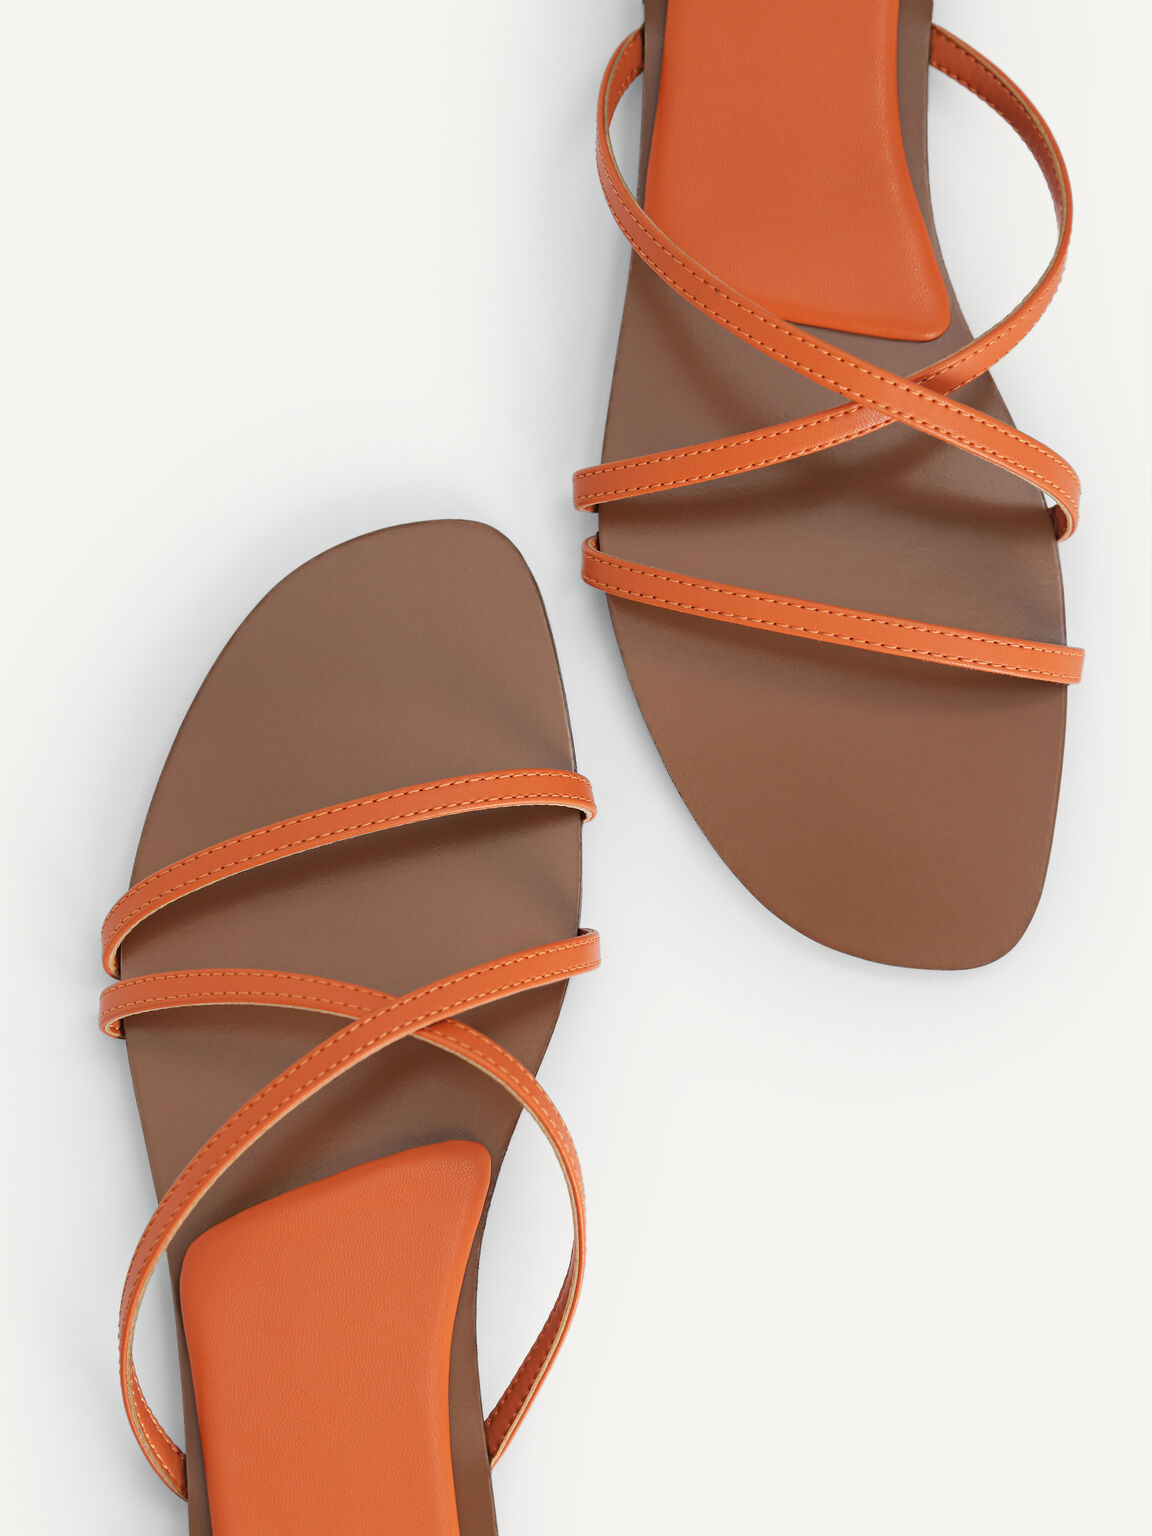 Criss-Cross Strappy Sandals, Orange, hi-res